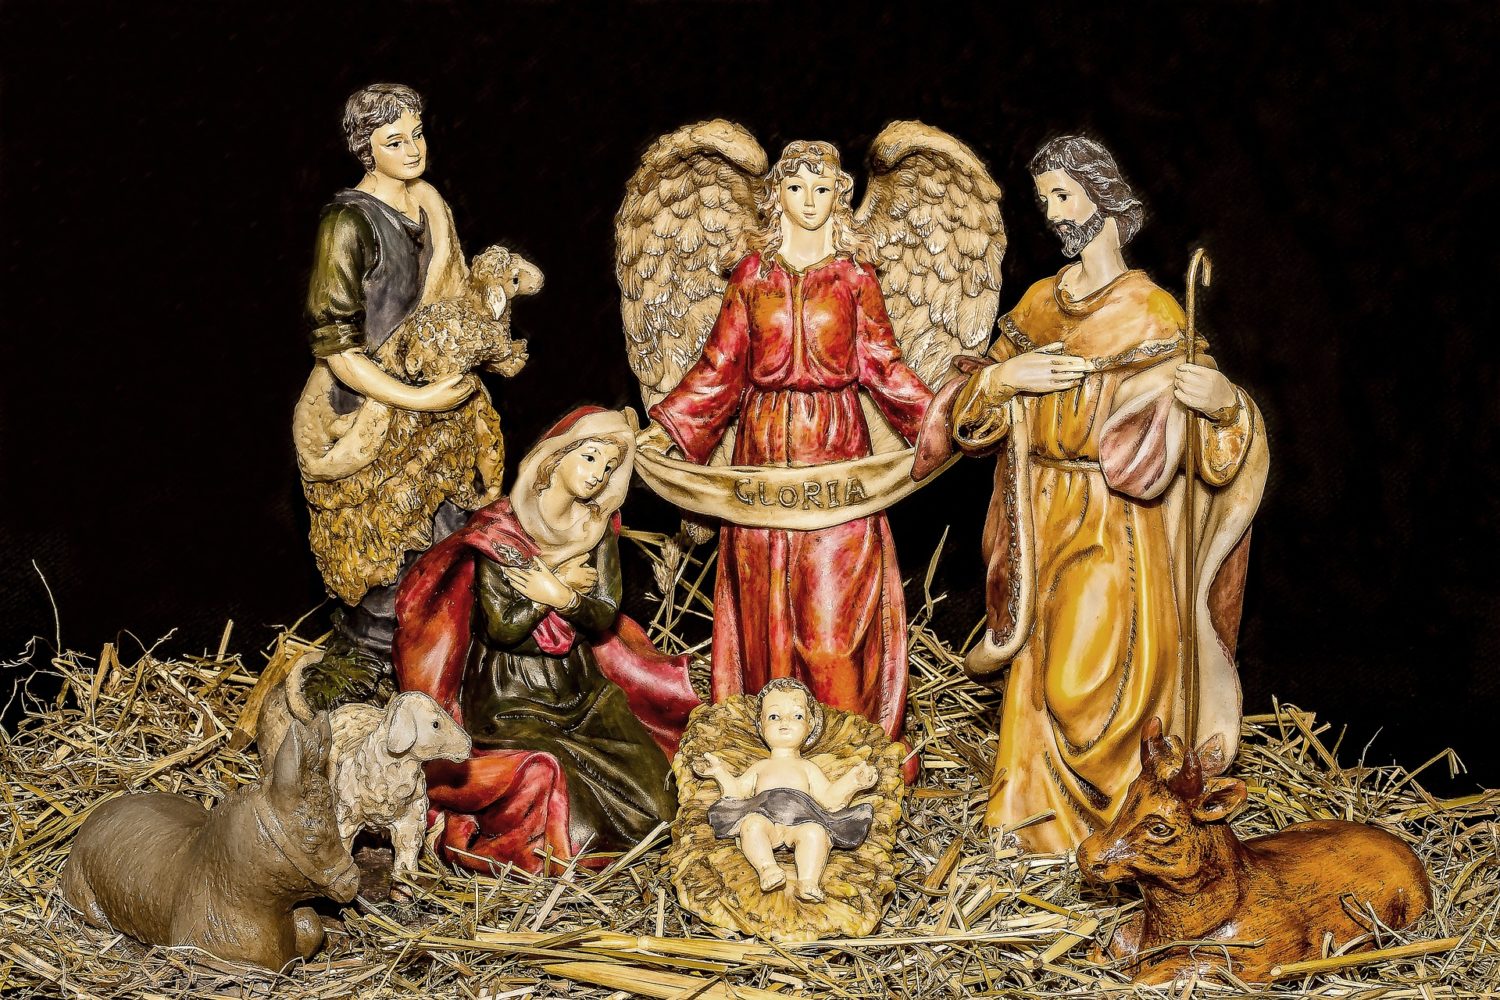 United States President Barack Obama Banned Nativity Scenes at the White House?